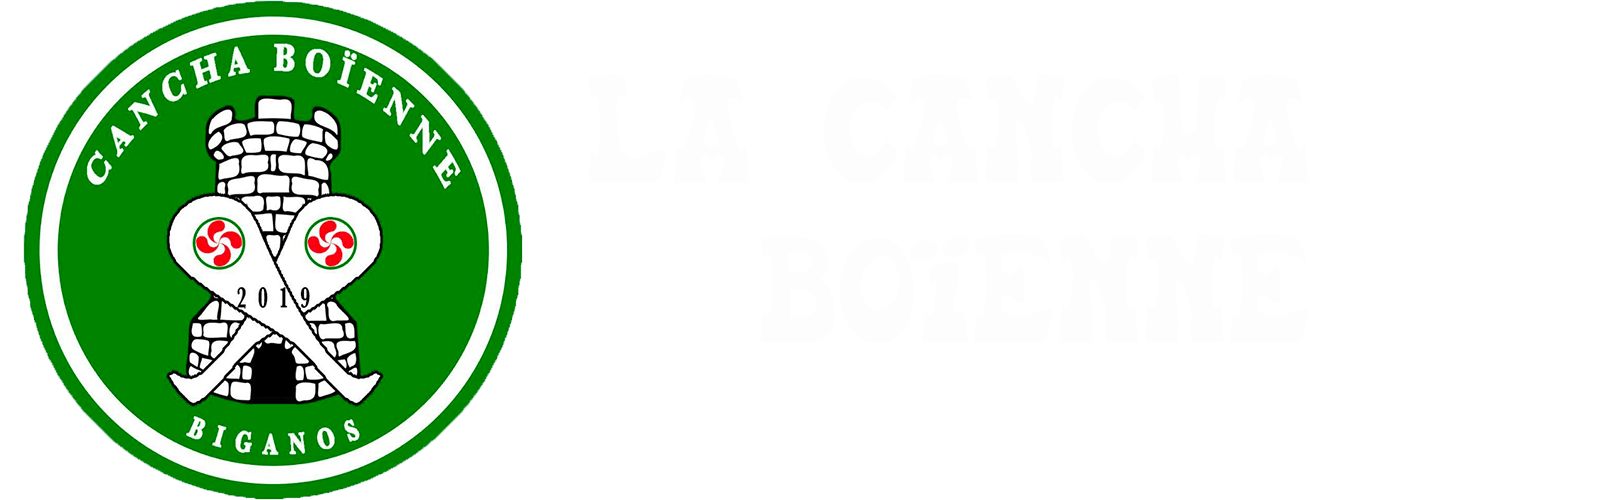 La Cancha Boienne